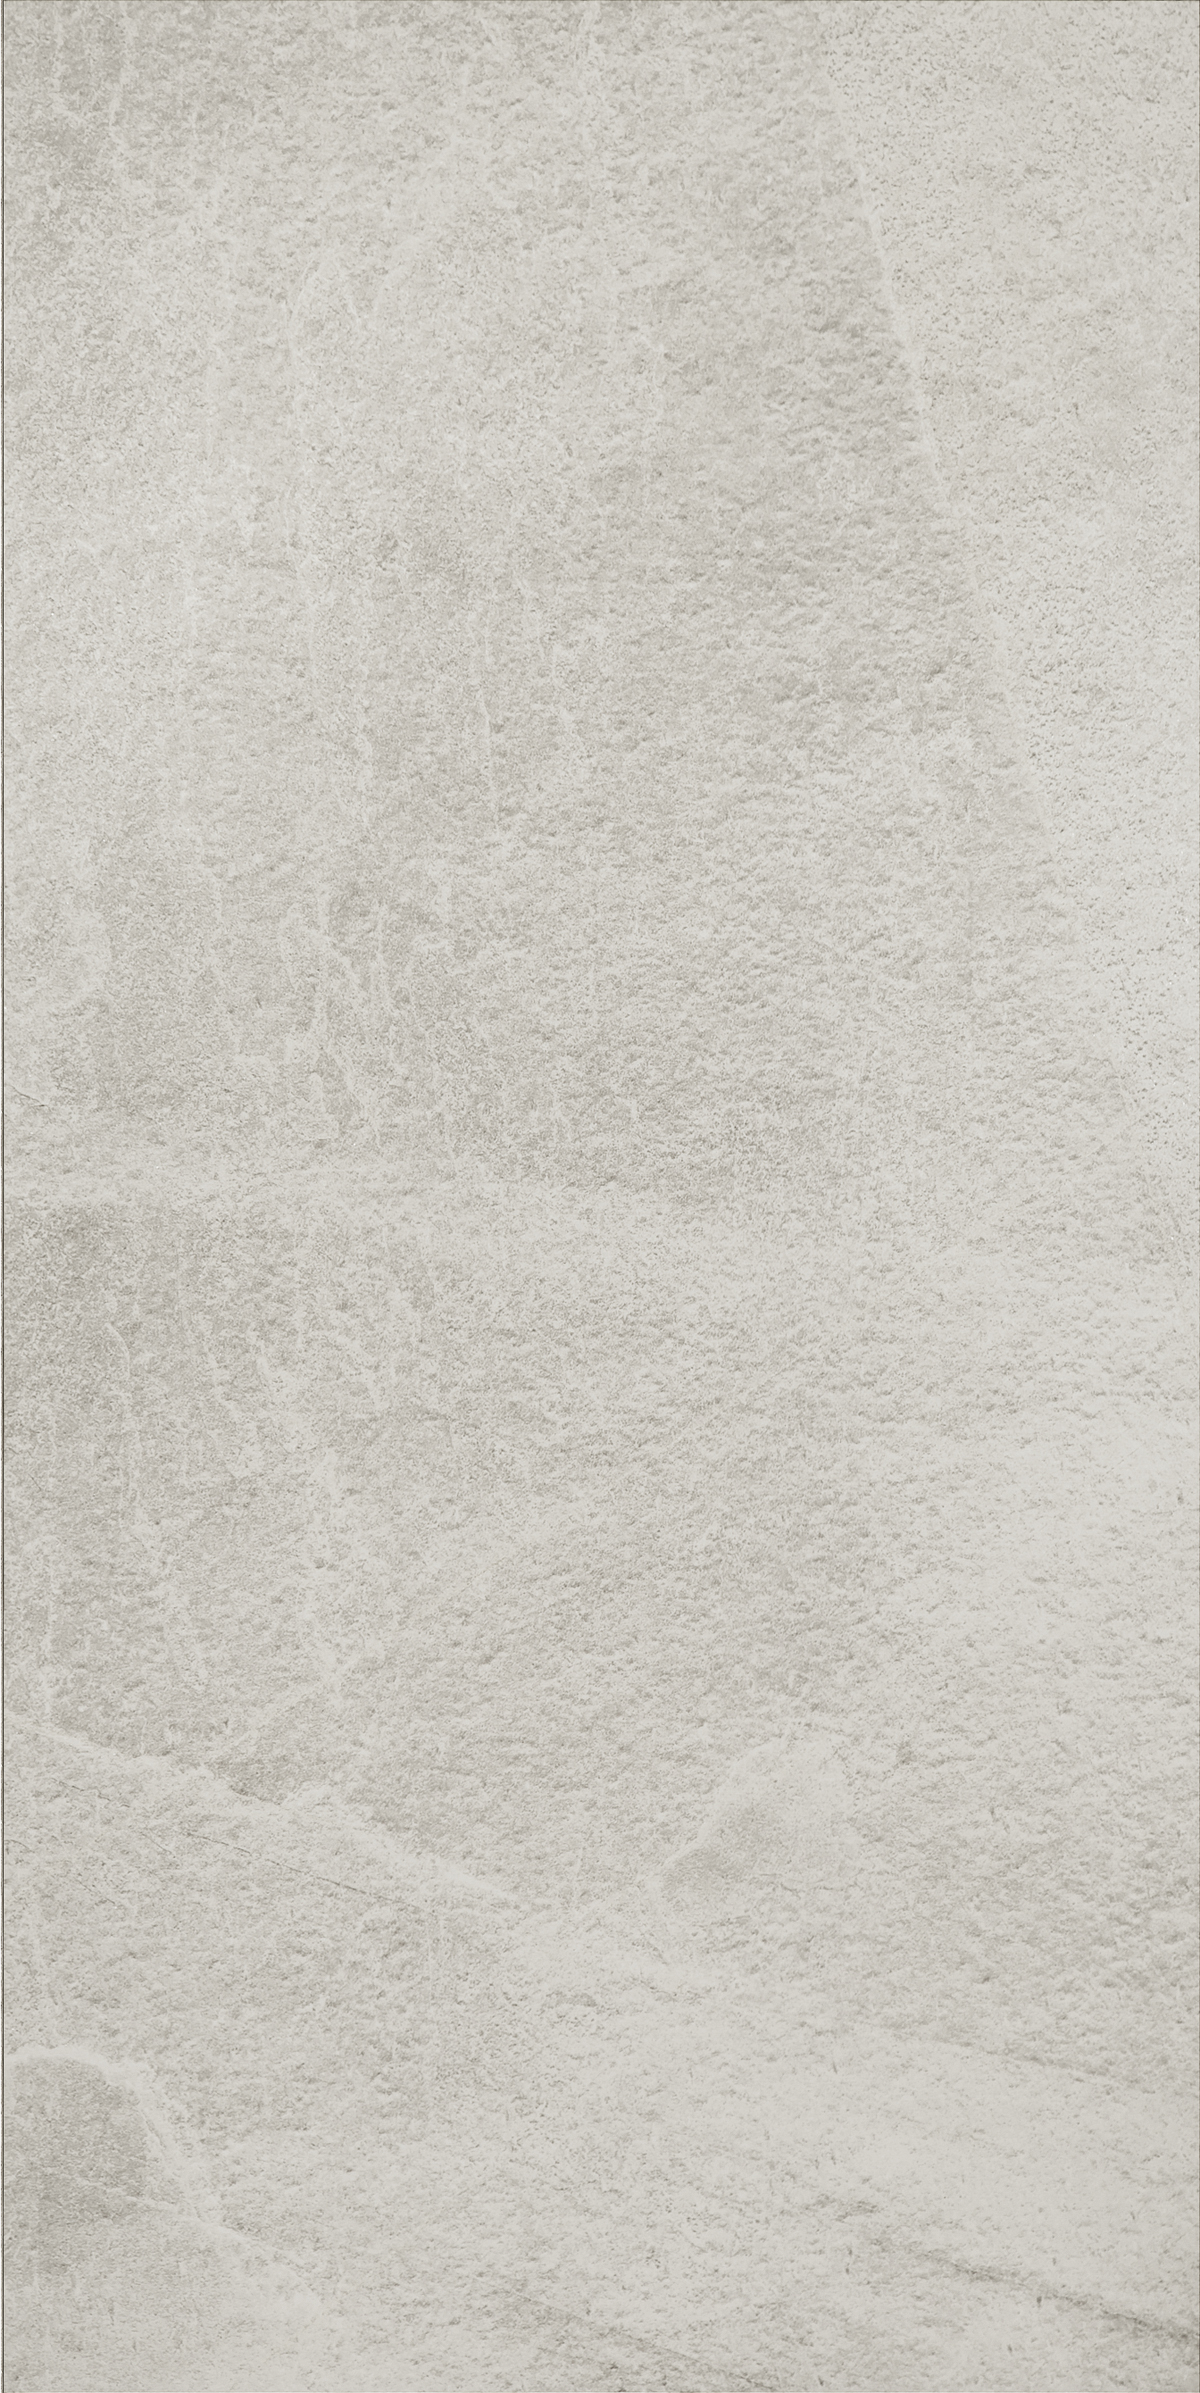 Imola X-Rock Bianco Natural Strutturato Matt 165179 60x120cm rectified 10mm - X-ROCK 12W